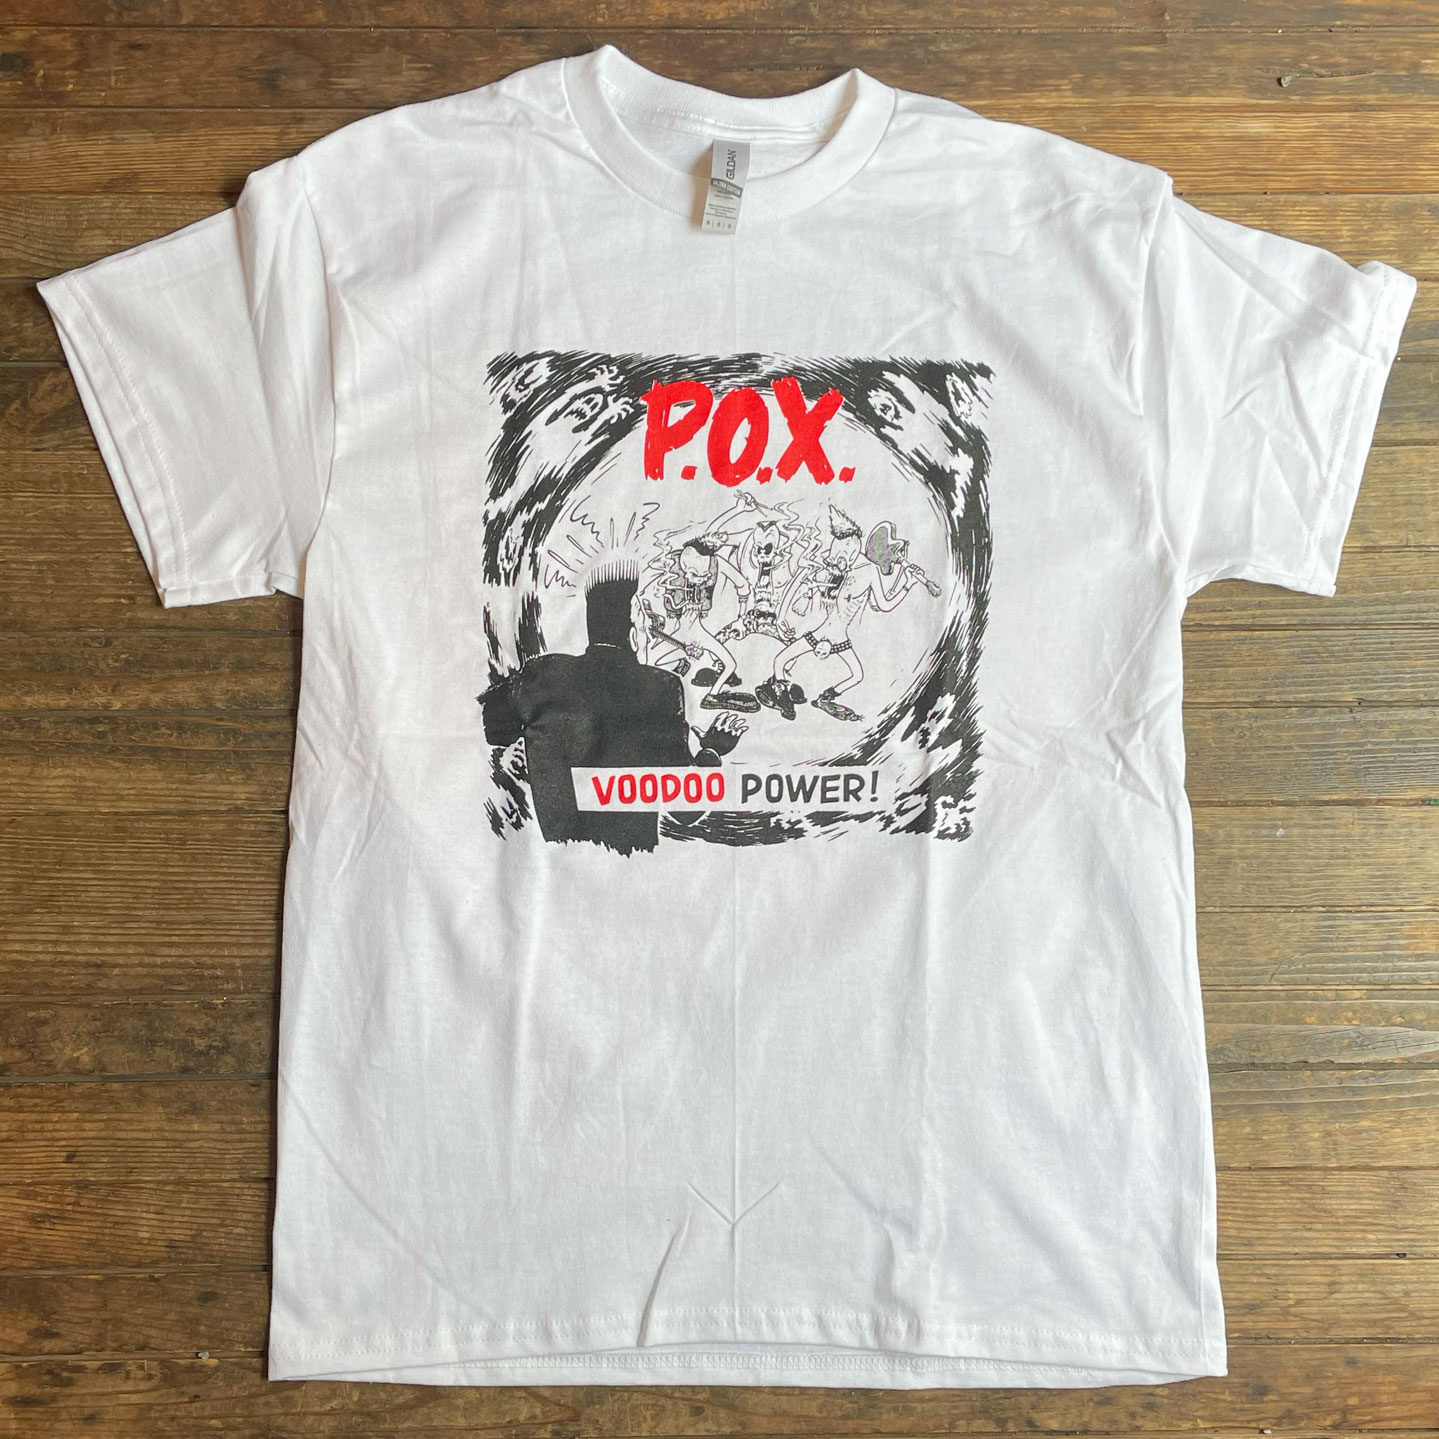 P.O.X. Tシャツ VOODOO POWER!